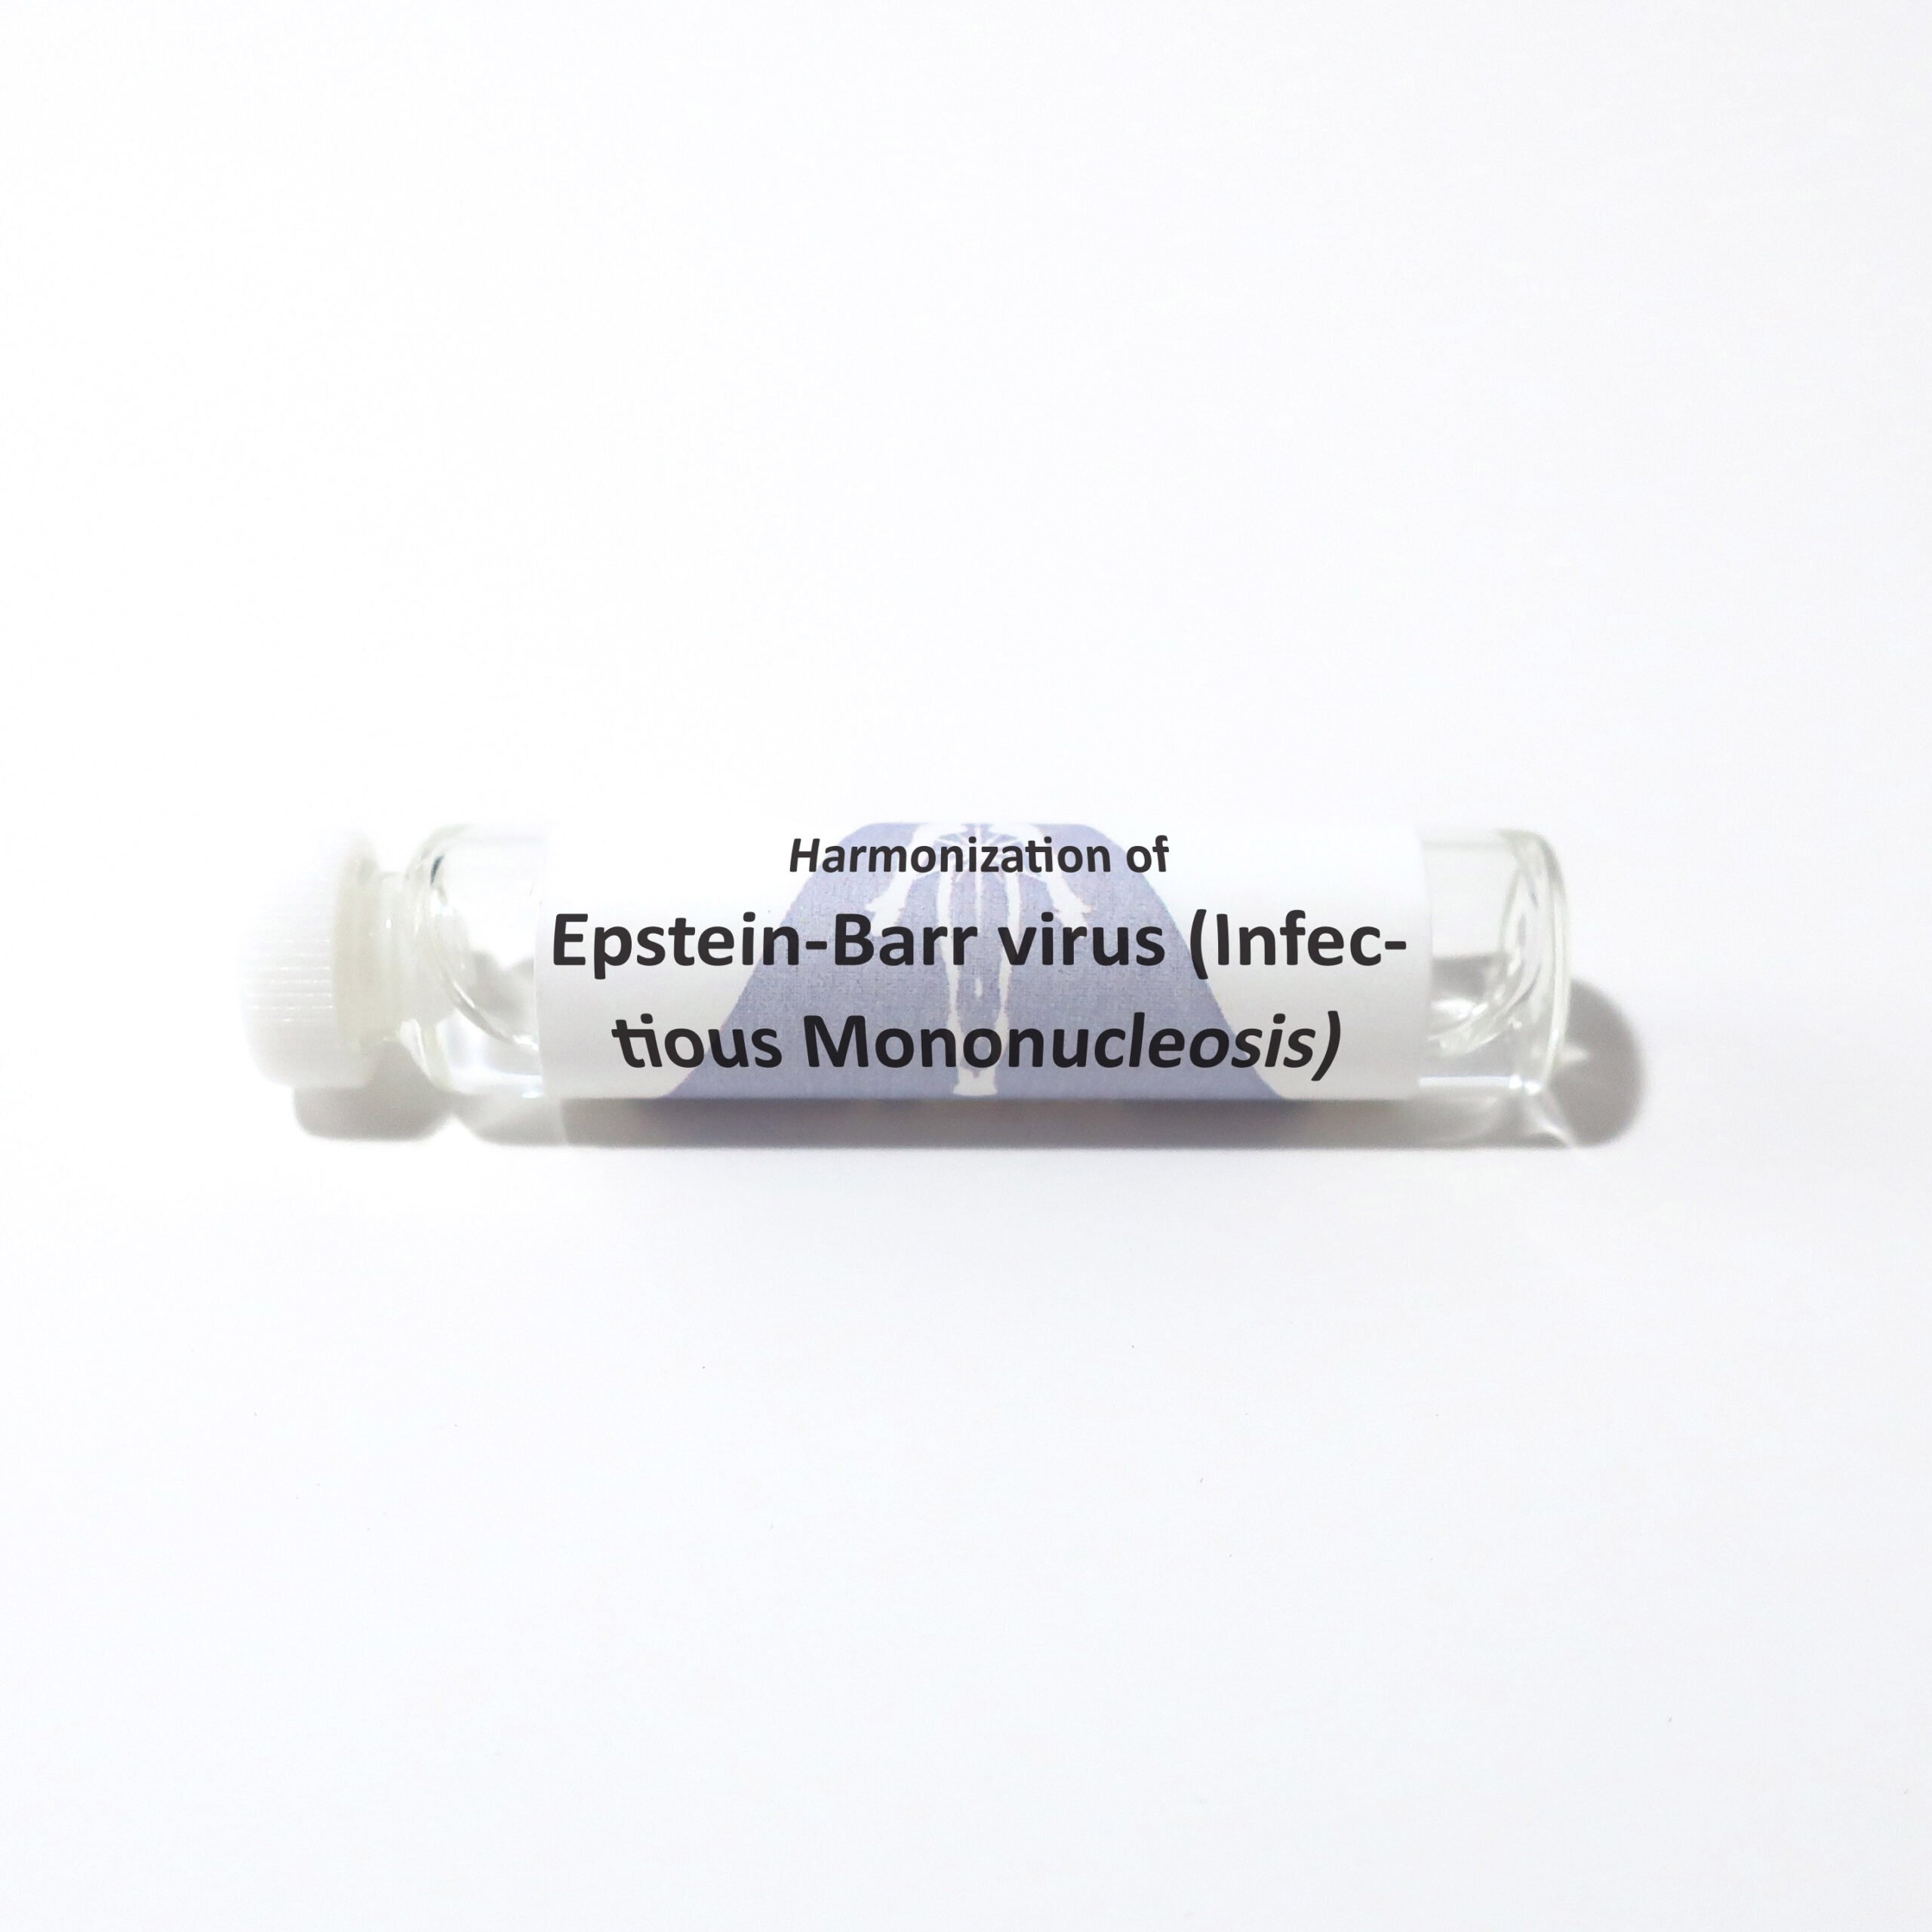 Epstein-Barr virus (Infectious Mononucleosis)